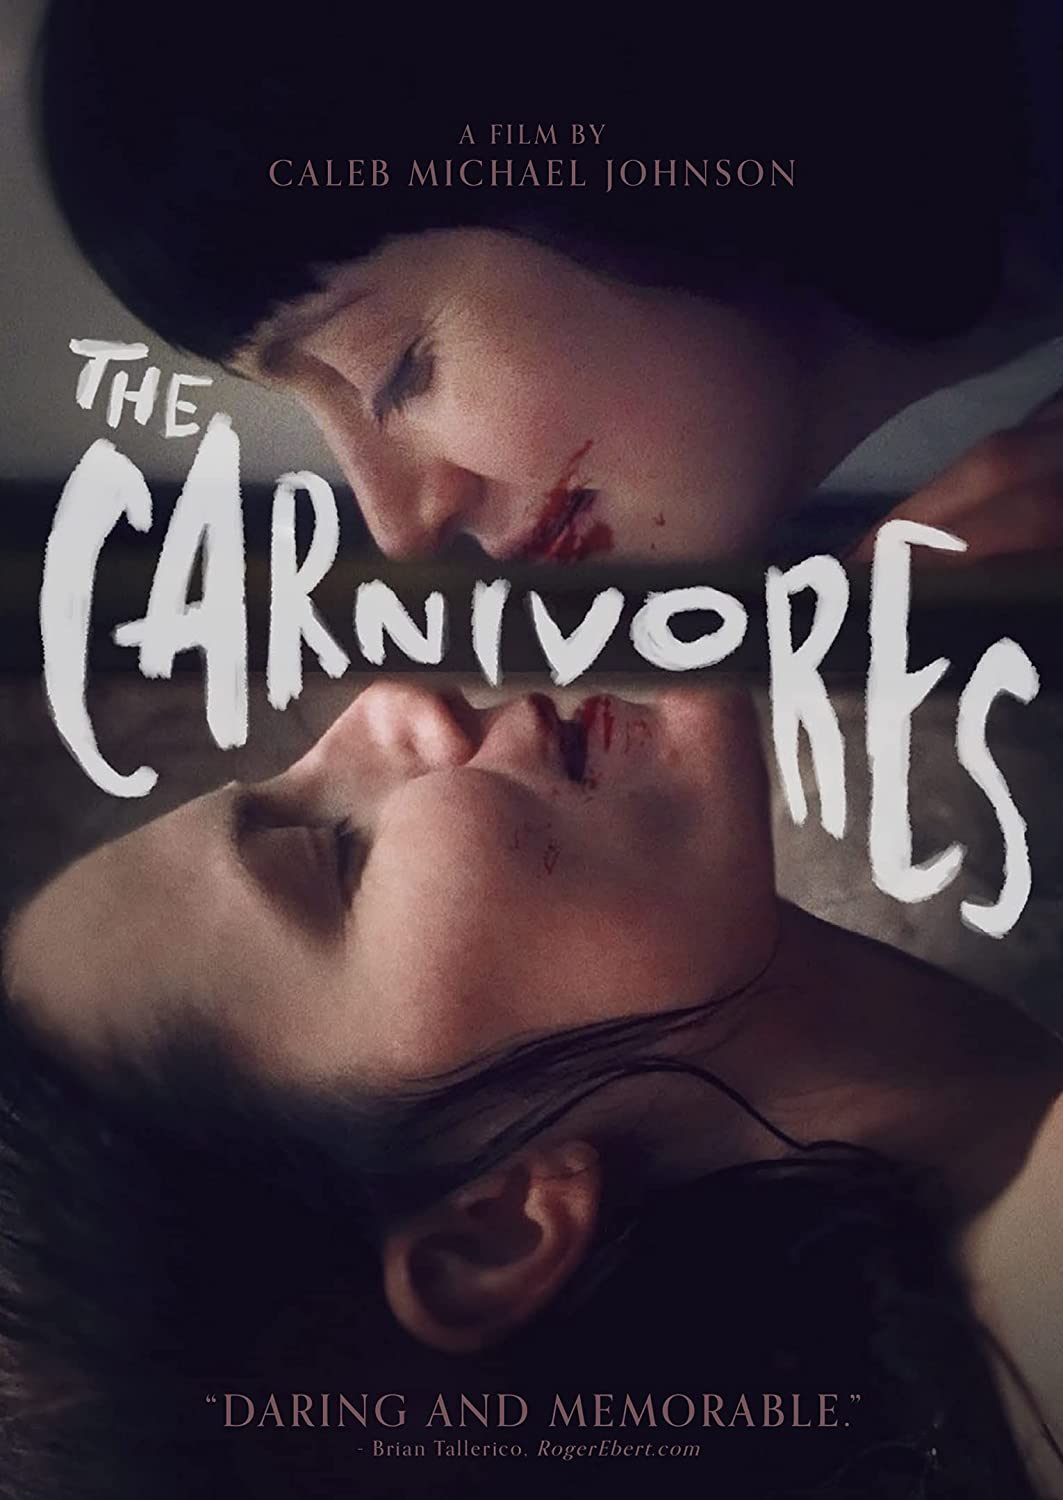 The Carnivores trailer